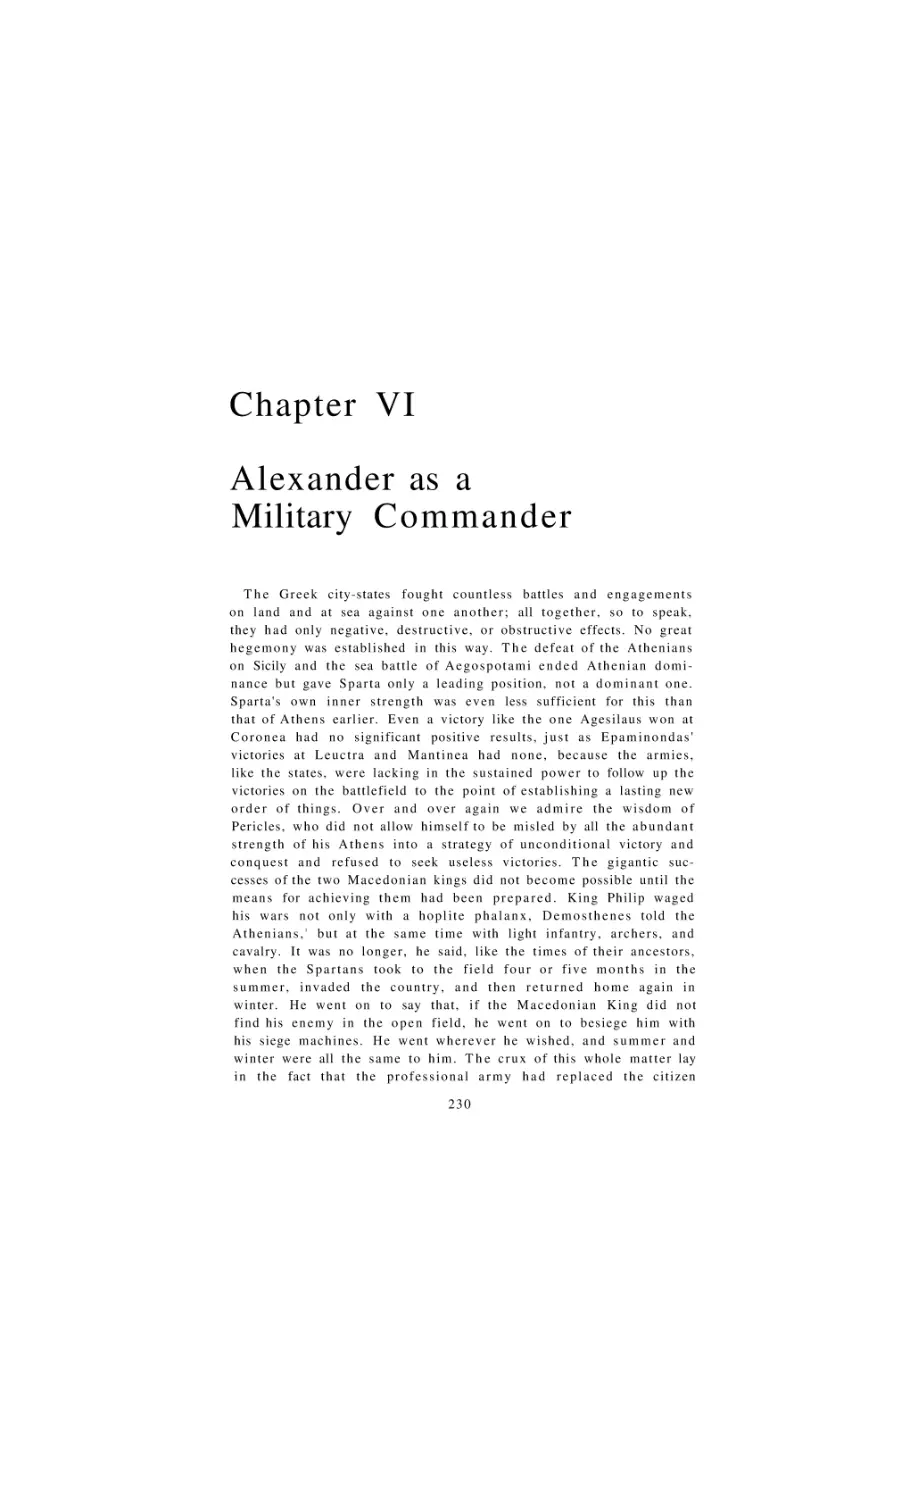 Alexander as a Military Commander